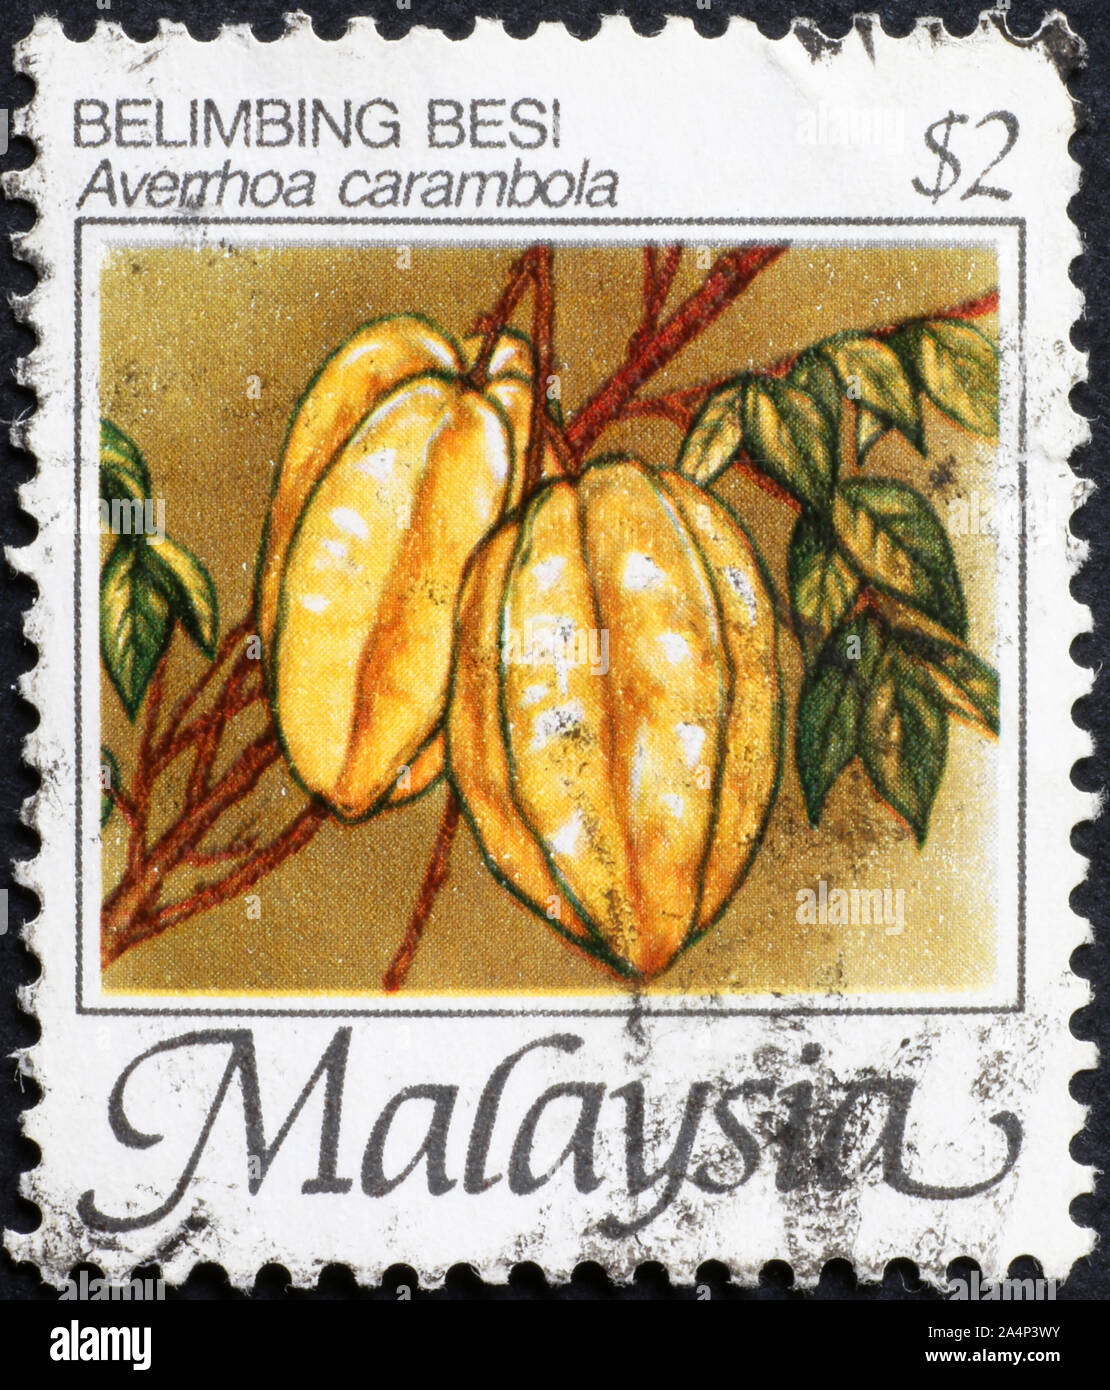 Starfruit on postage stamp of Malaysia Stock Photo